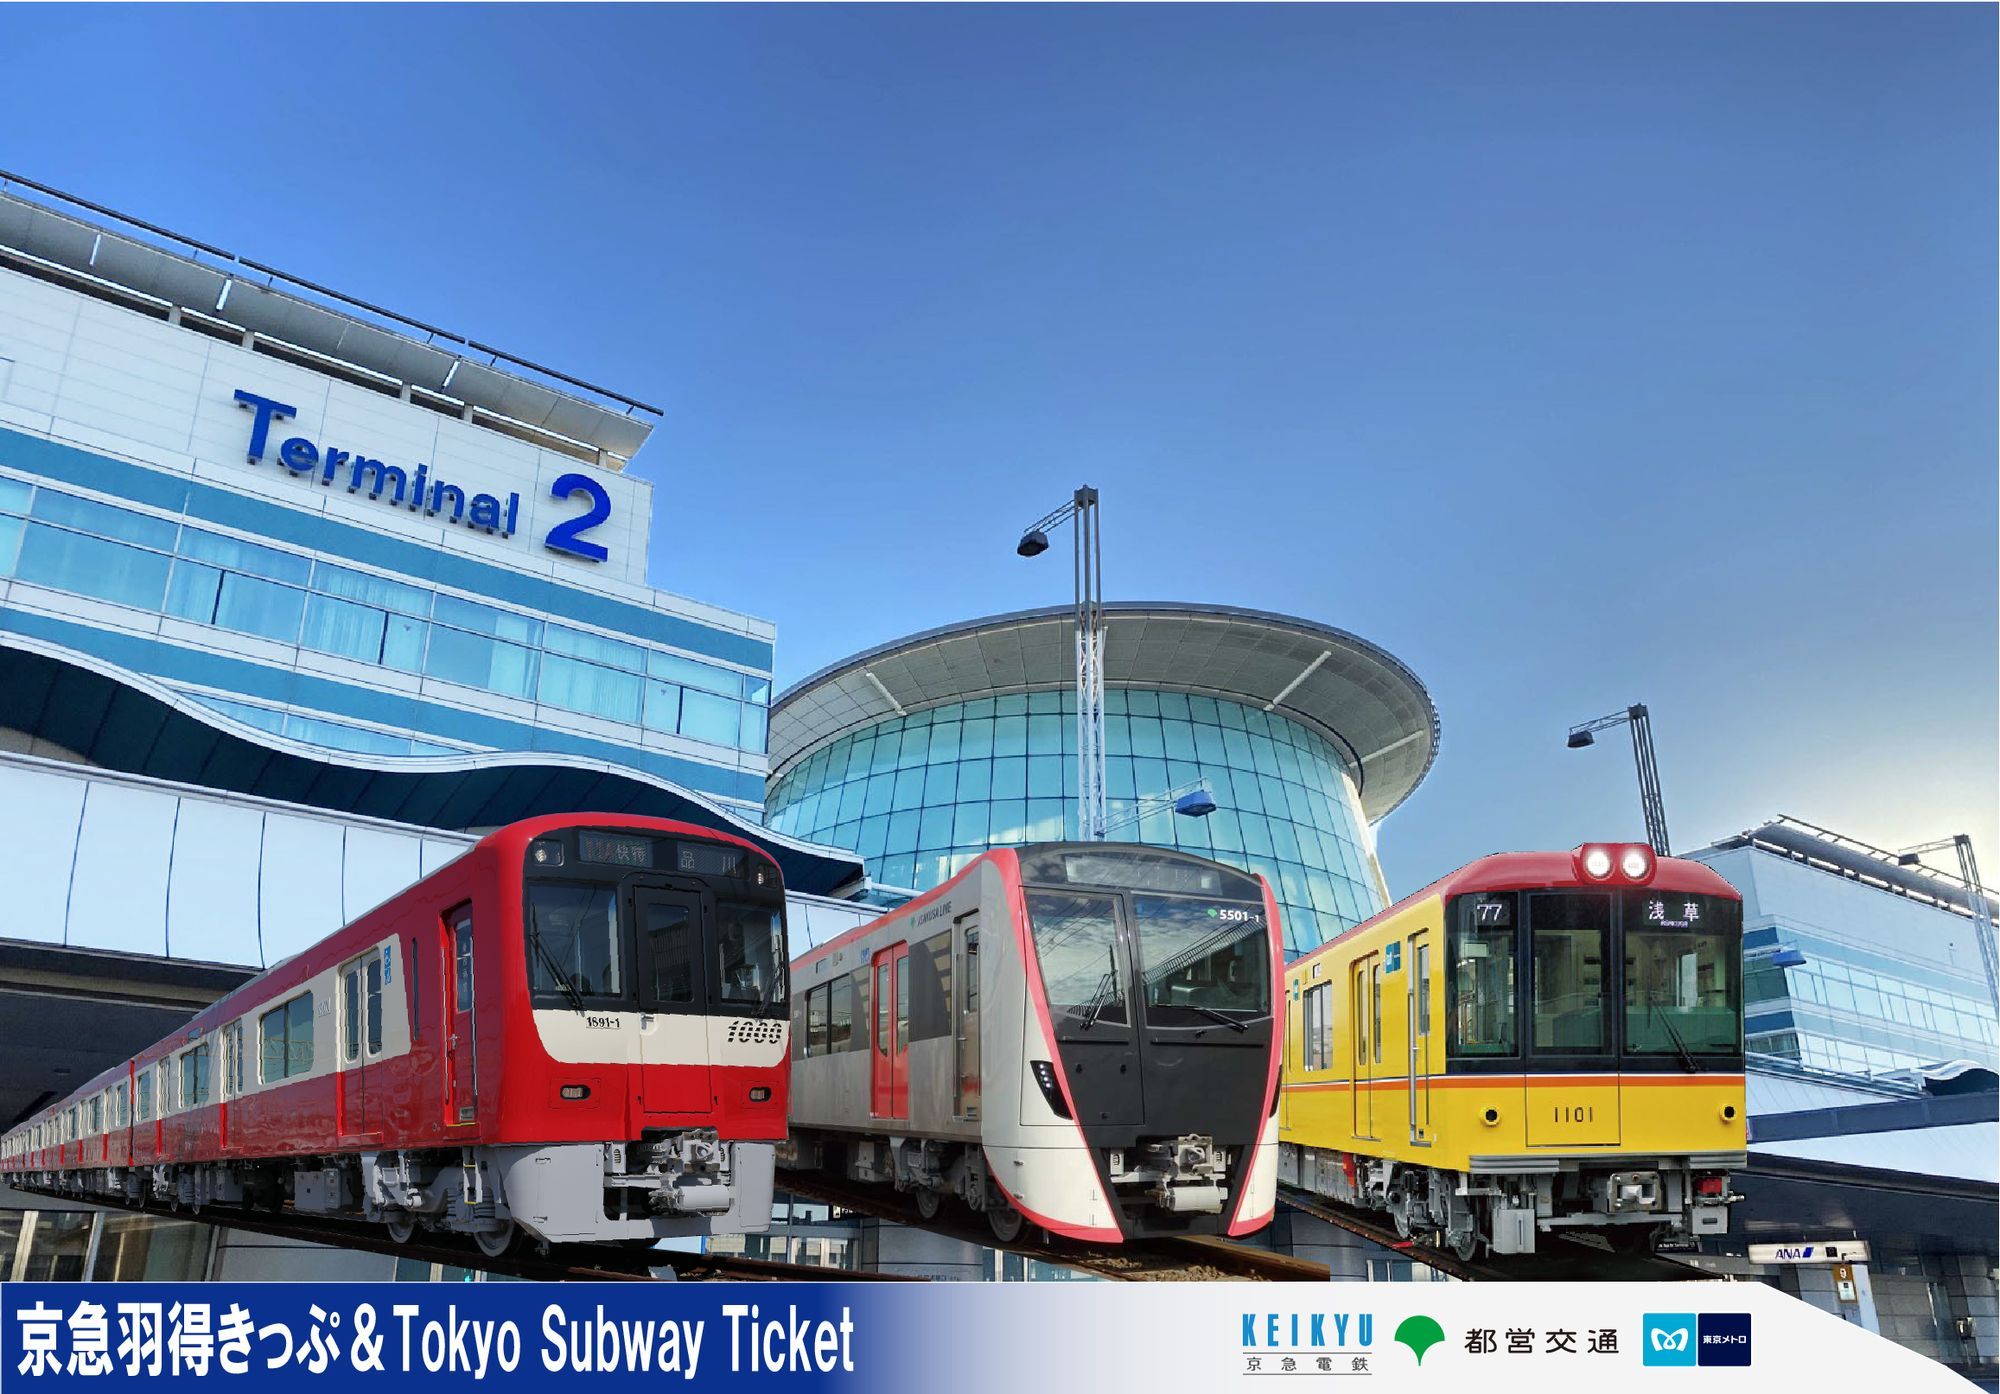 SKYTREE® ENJOY PACK Keikyu Hatoku Ticket & Tokyo Subway 24-hour Ticket Set Plan